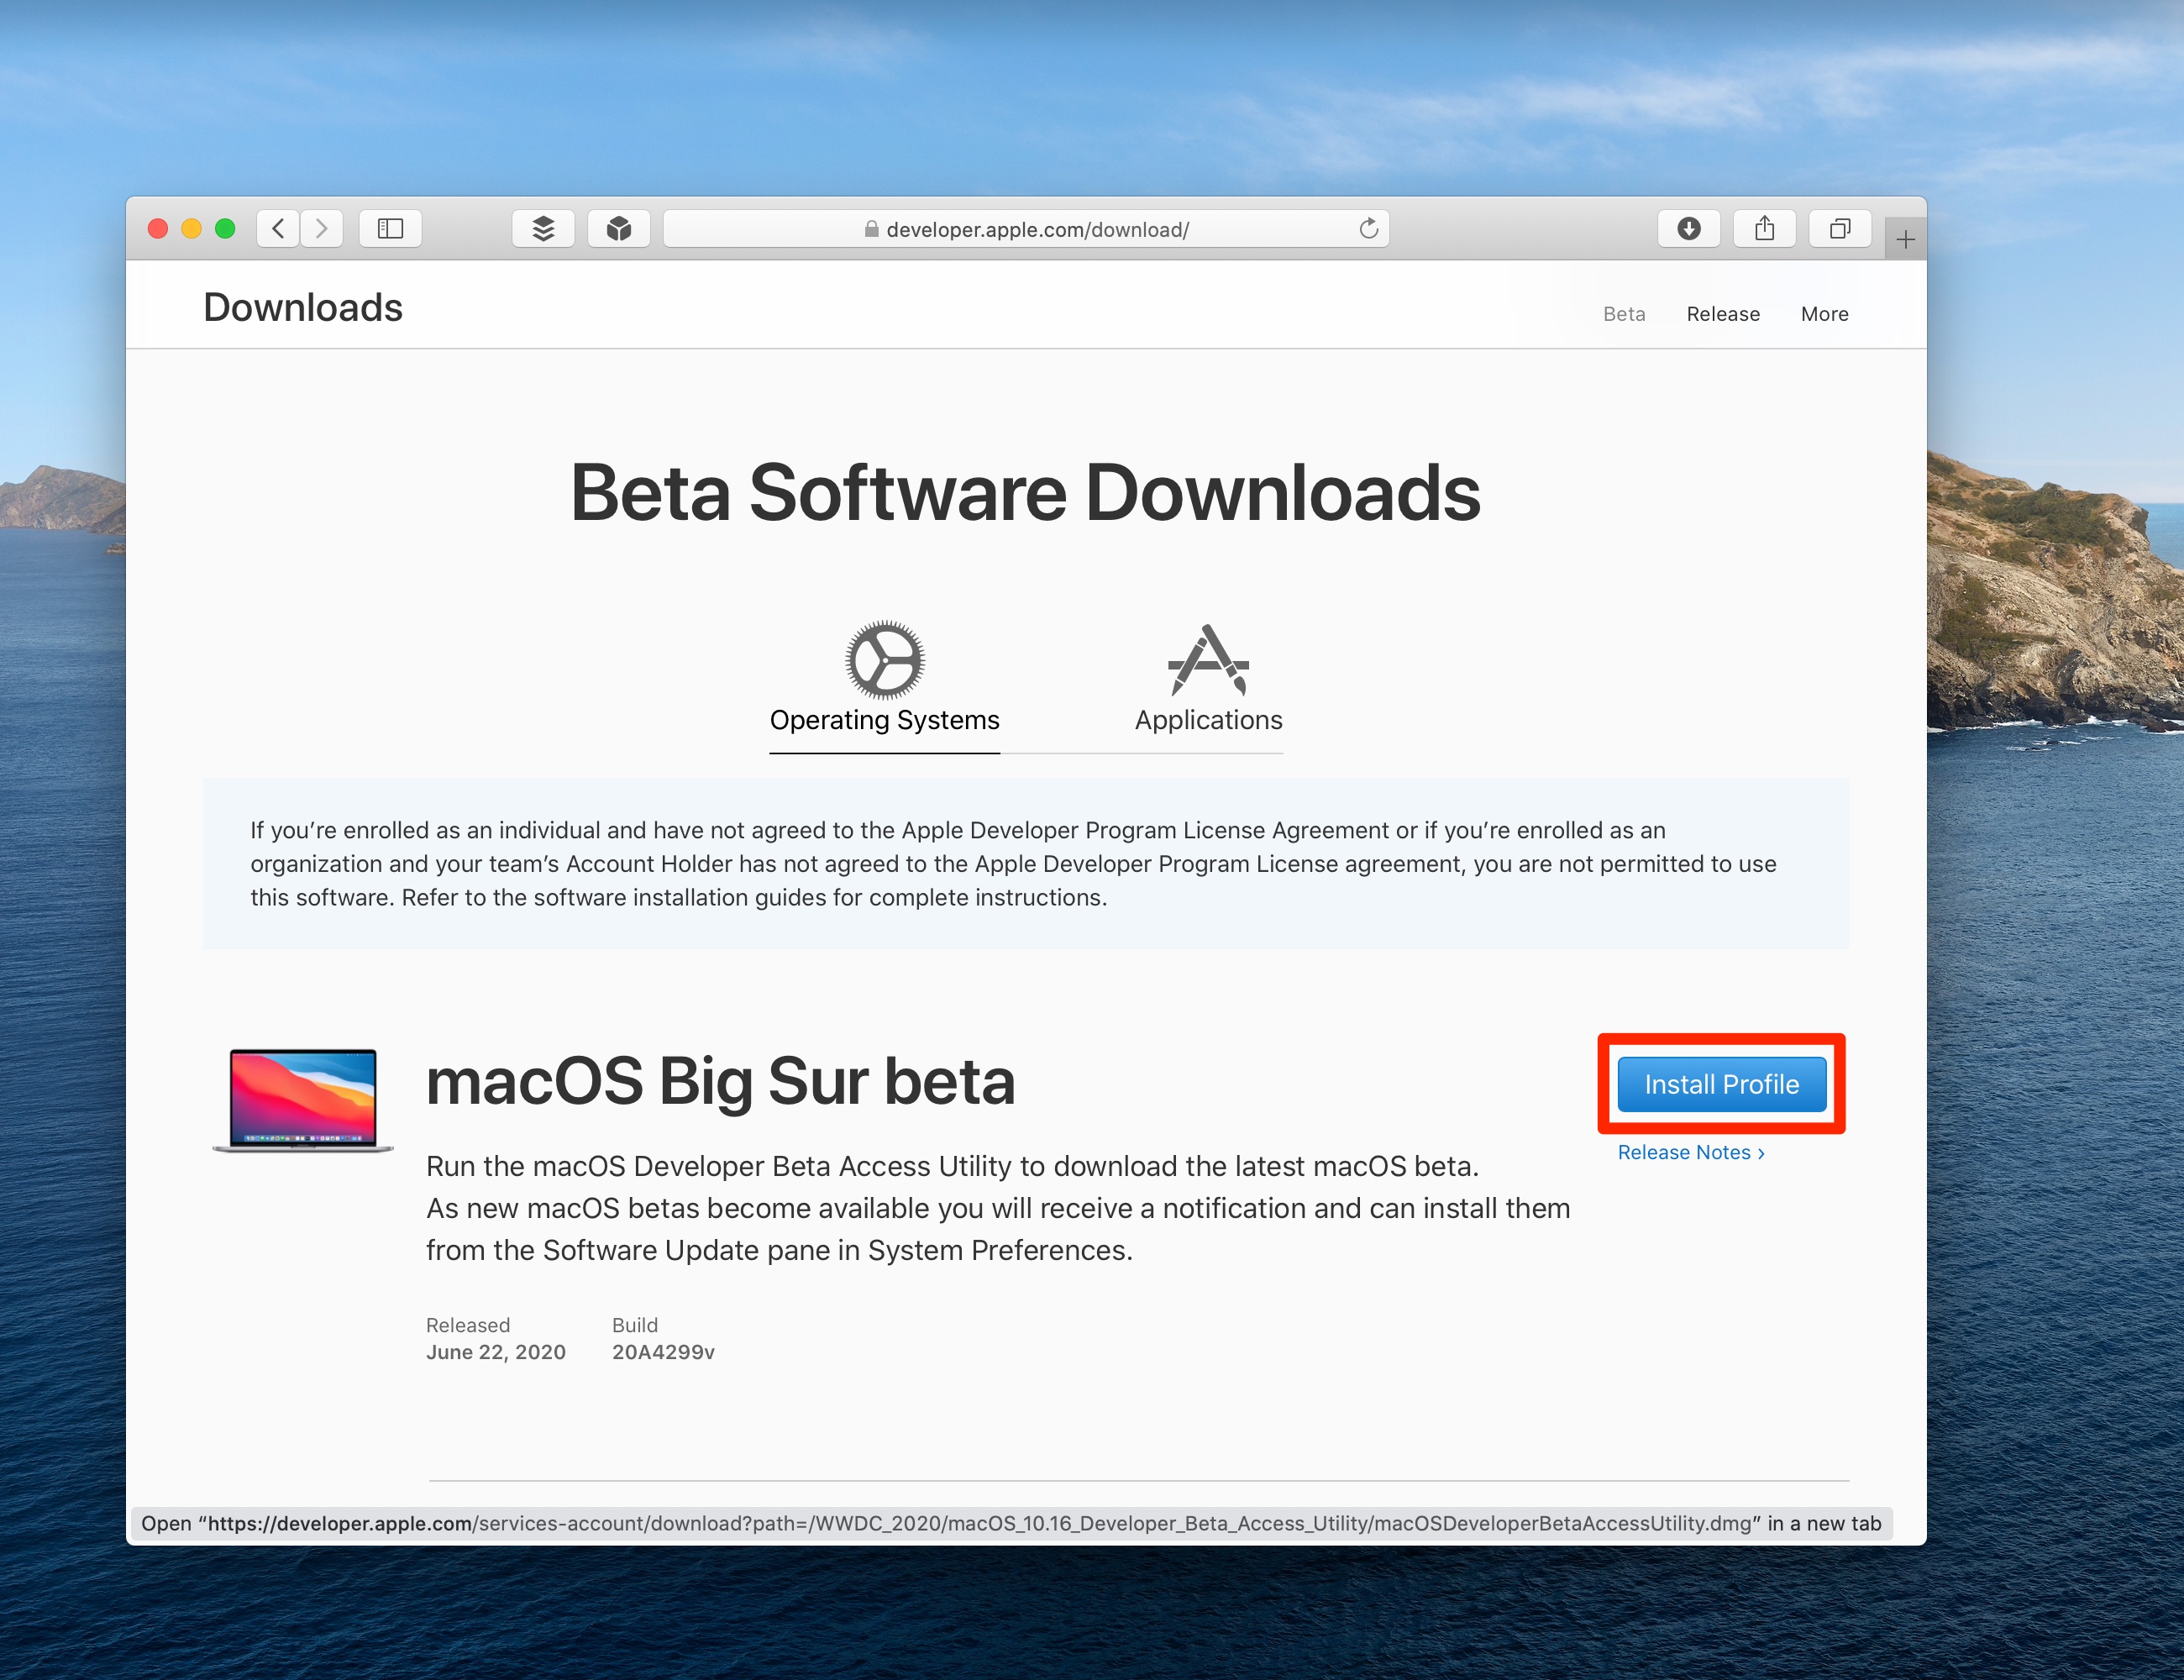 Apple Developer portal - MacOS Big Sur beta download